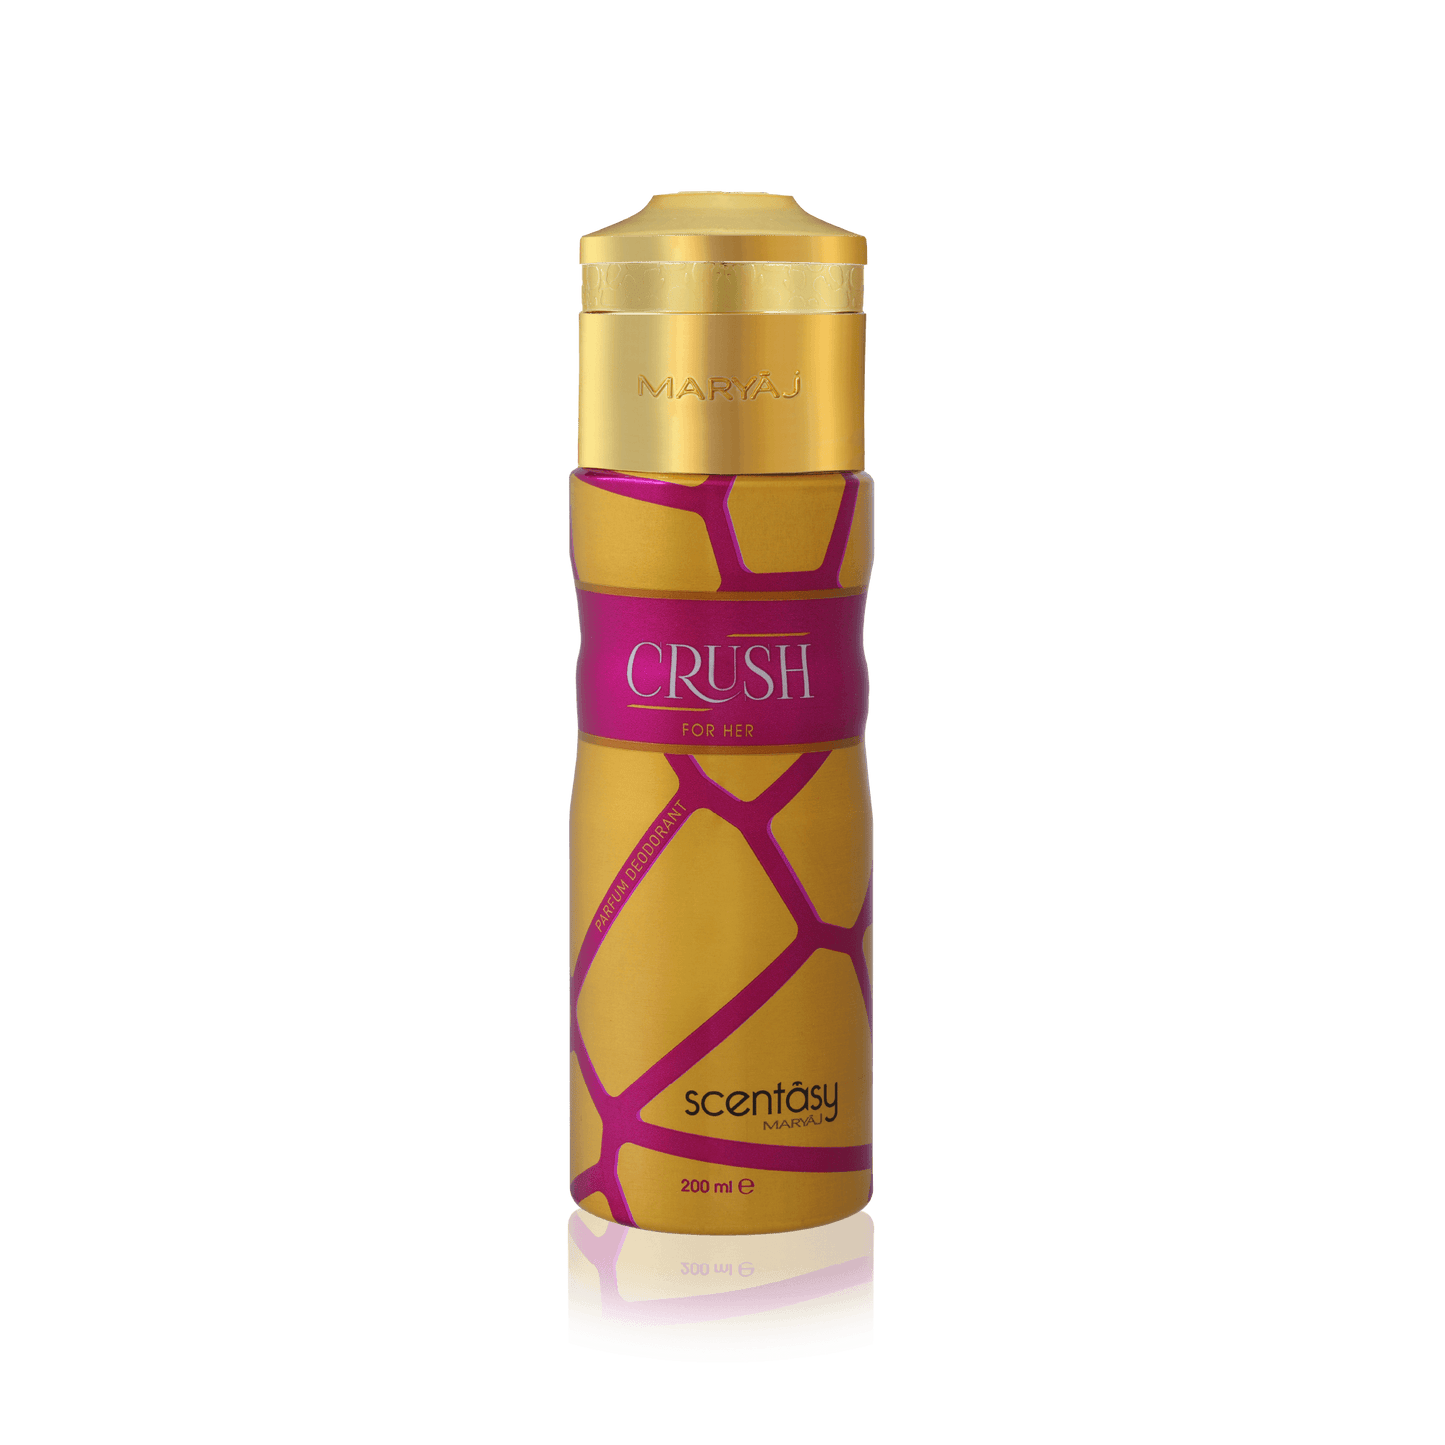 Furly Perfume Gift Set for Women (Eau de Parfum Spray 80ml + Crush Perfume Body Spray 200ml)